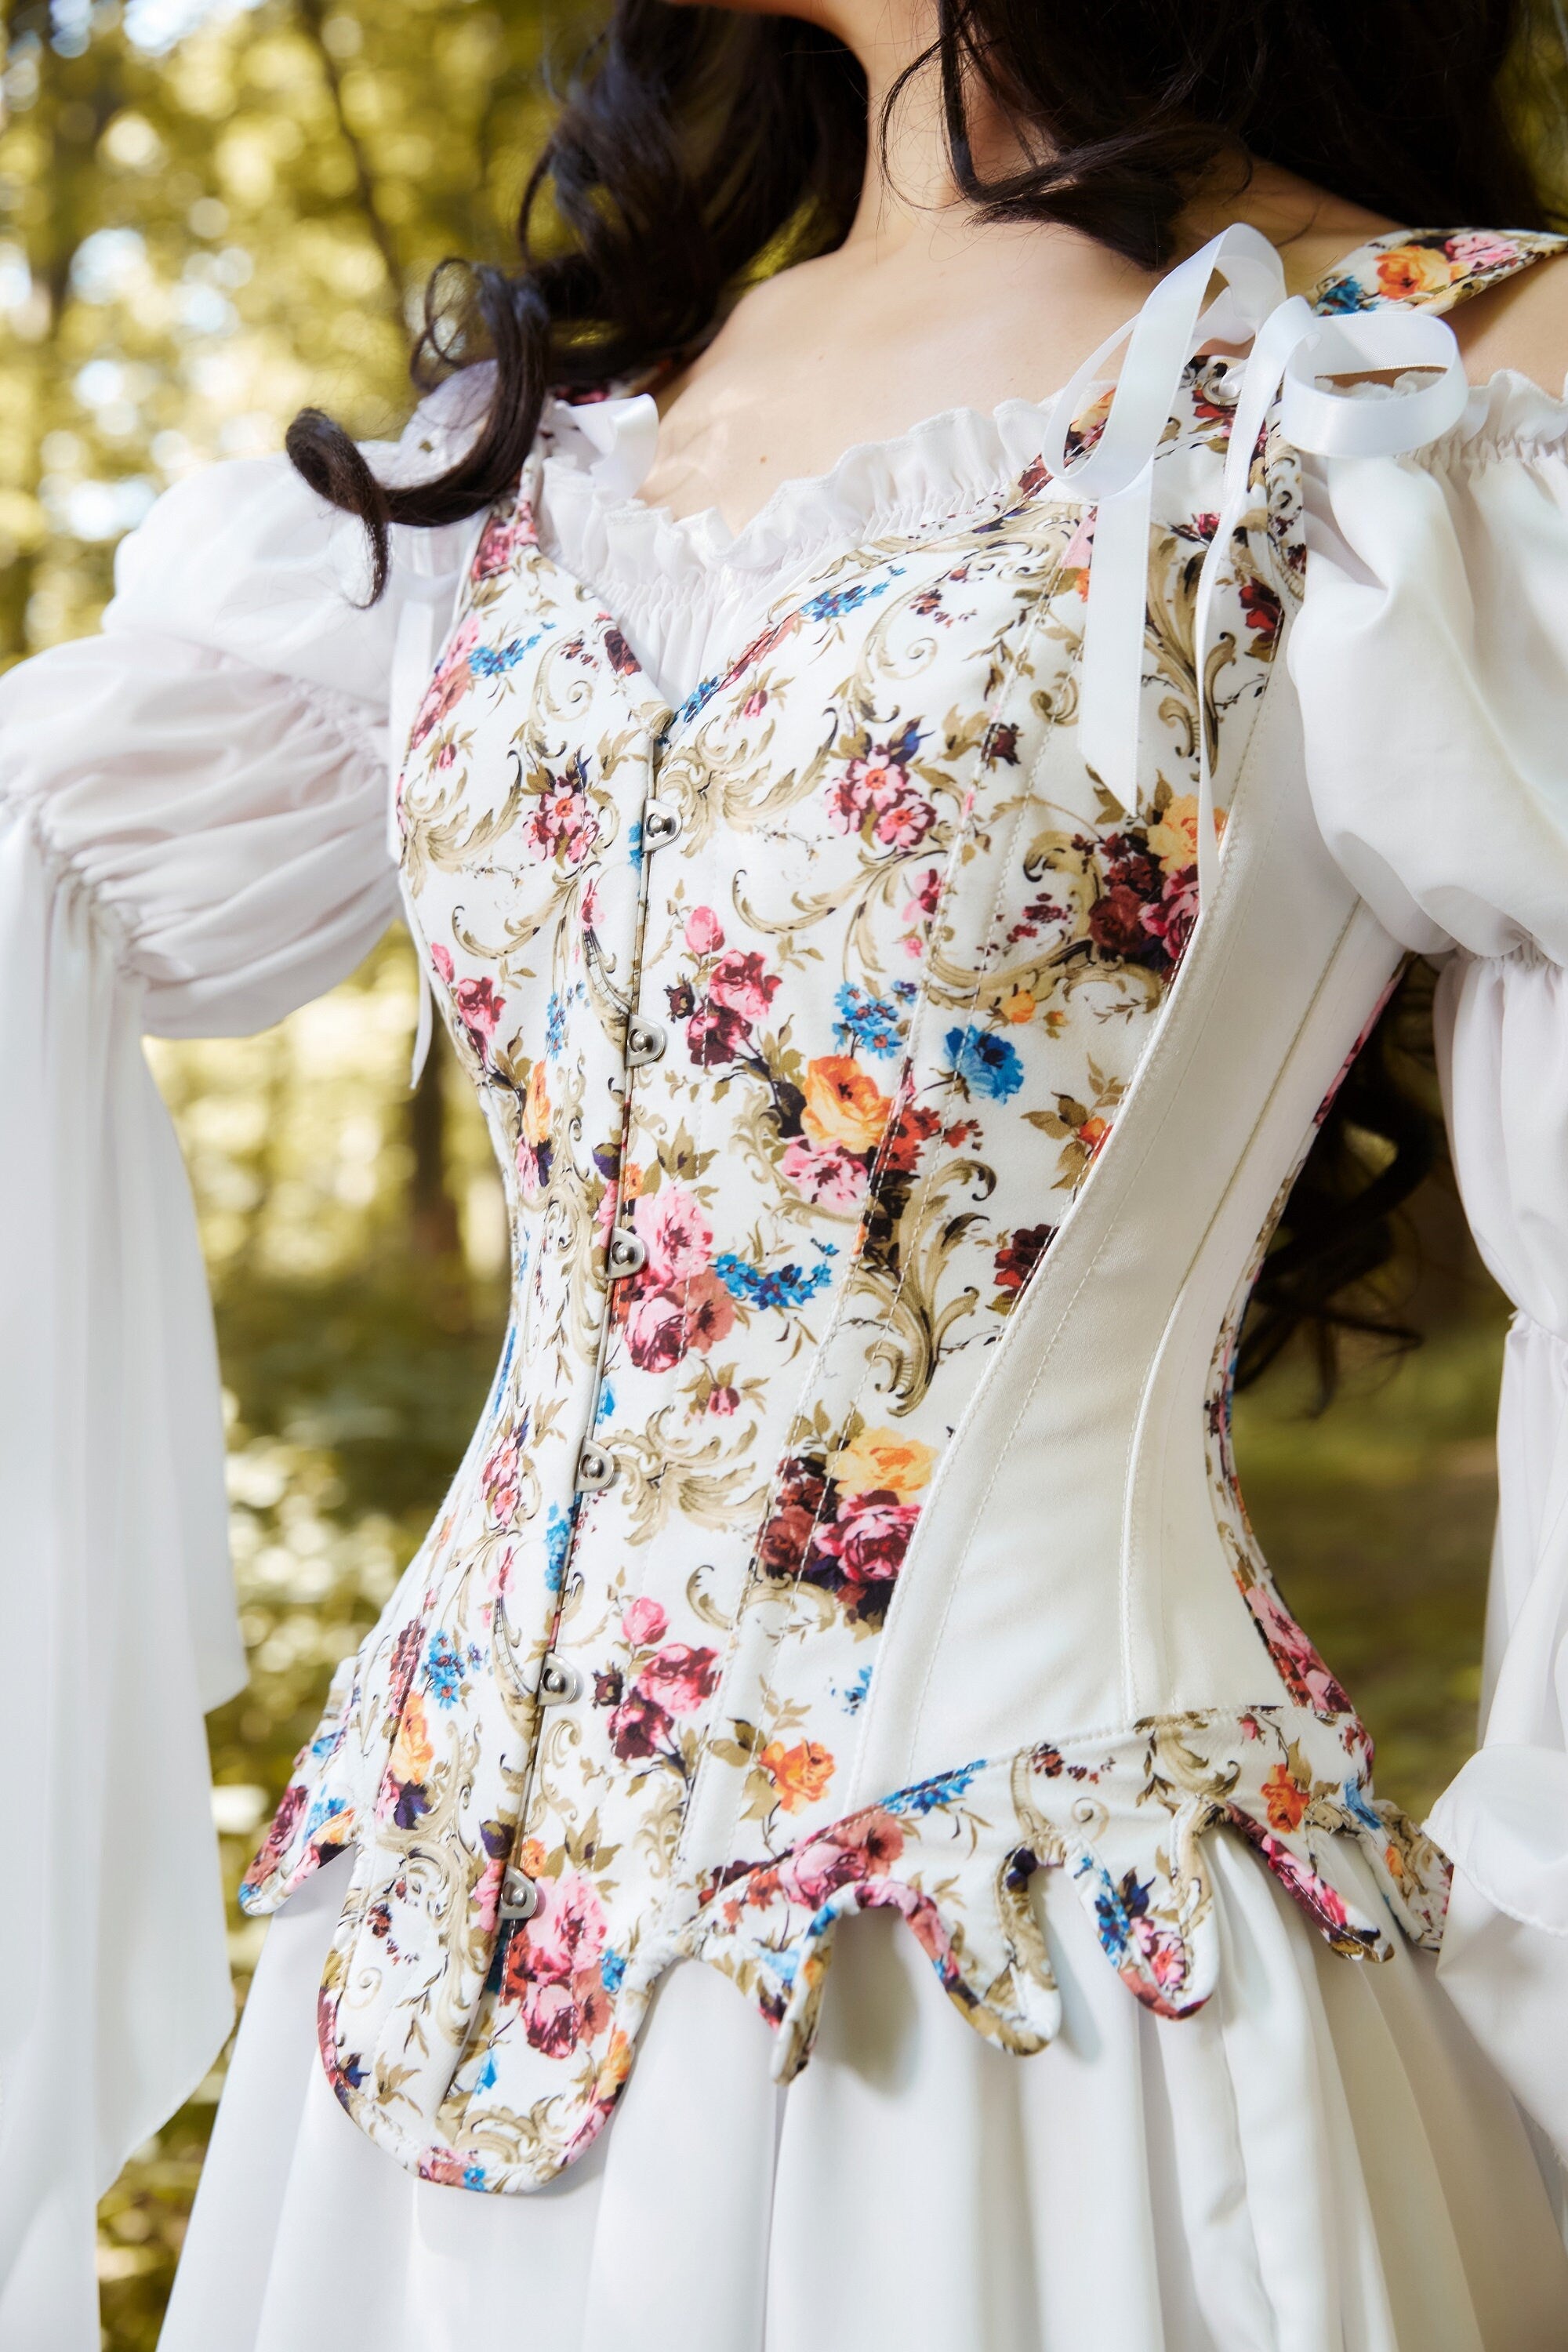 Reminisce - The White  “Summer Fantasy” Fairy - Women’s Renaissance Costume - Ren Faire - Medieval Fantasy - Dress and Corset